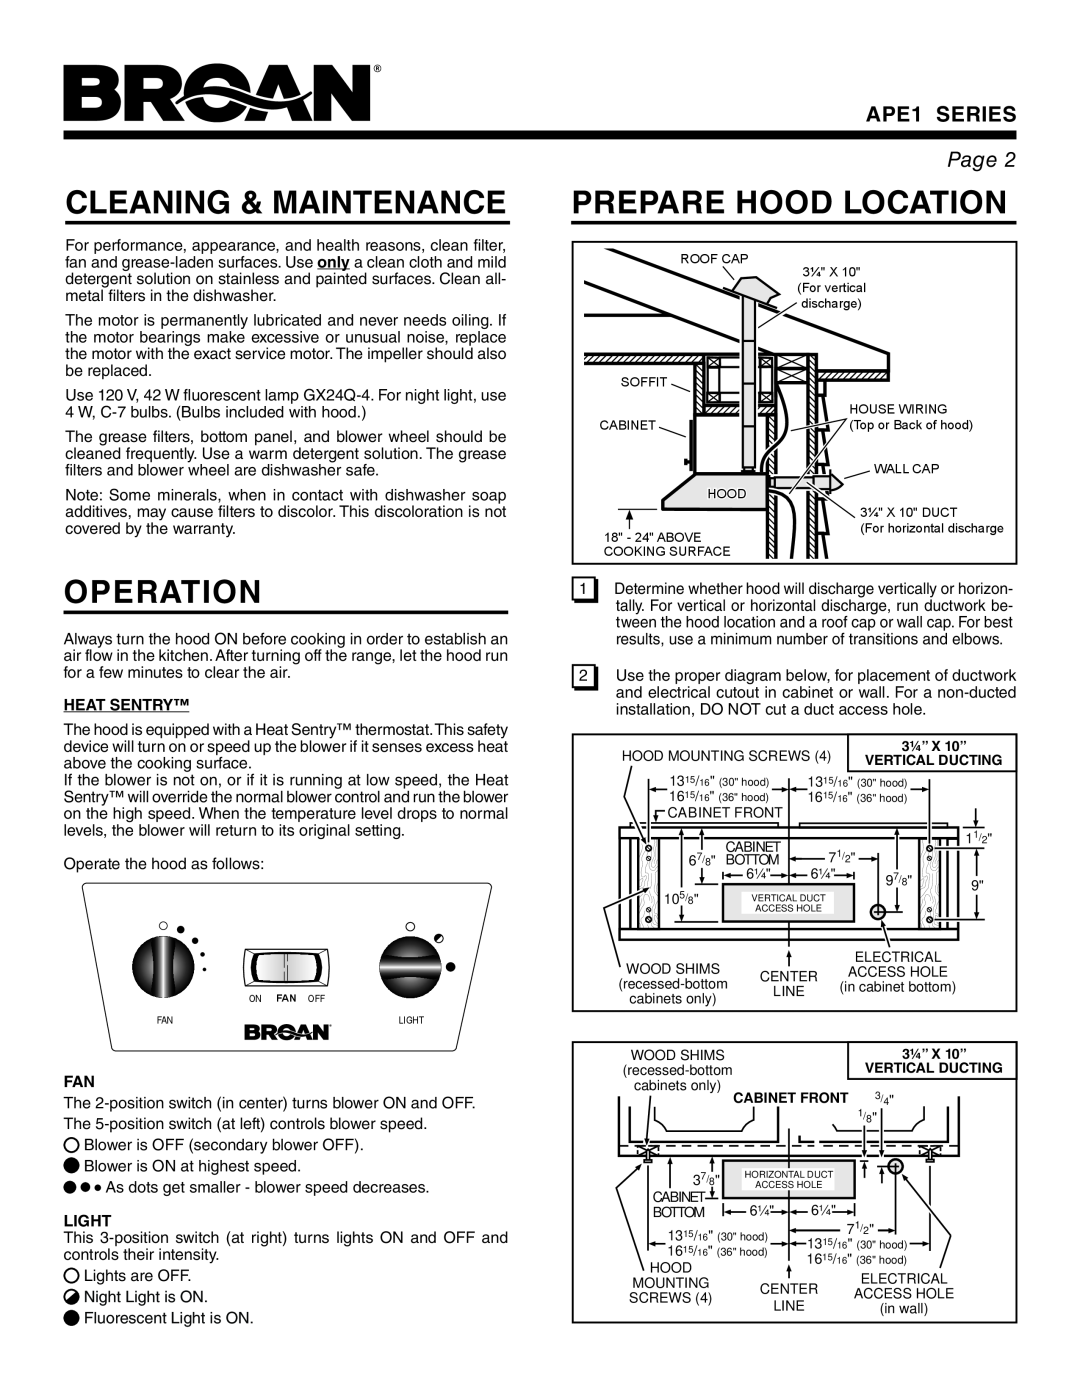 Broan warranty Cleaning & Maintenance, Prepare Hood Location, Operation, Heat Sentry, Light, APE1 SERIES, Page 